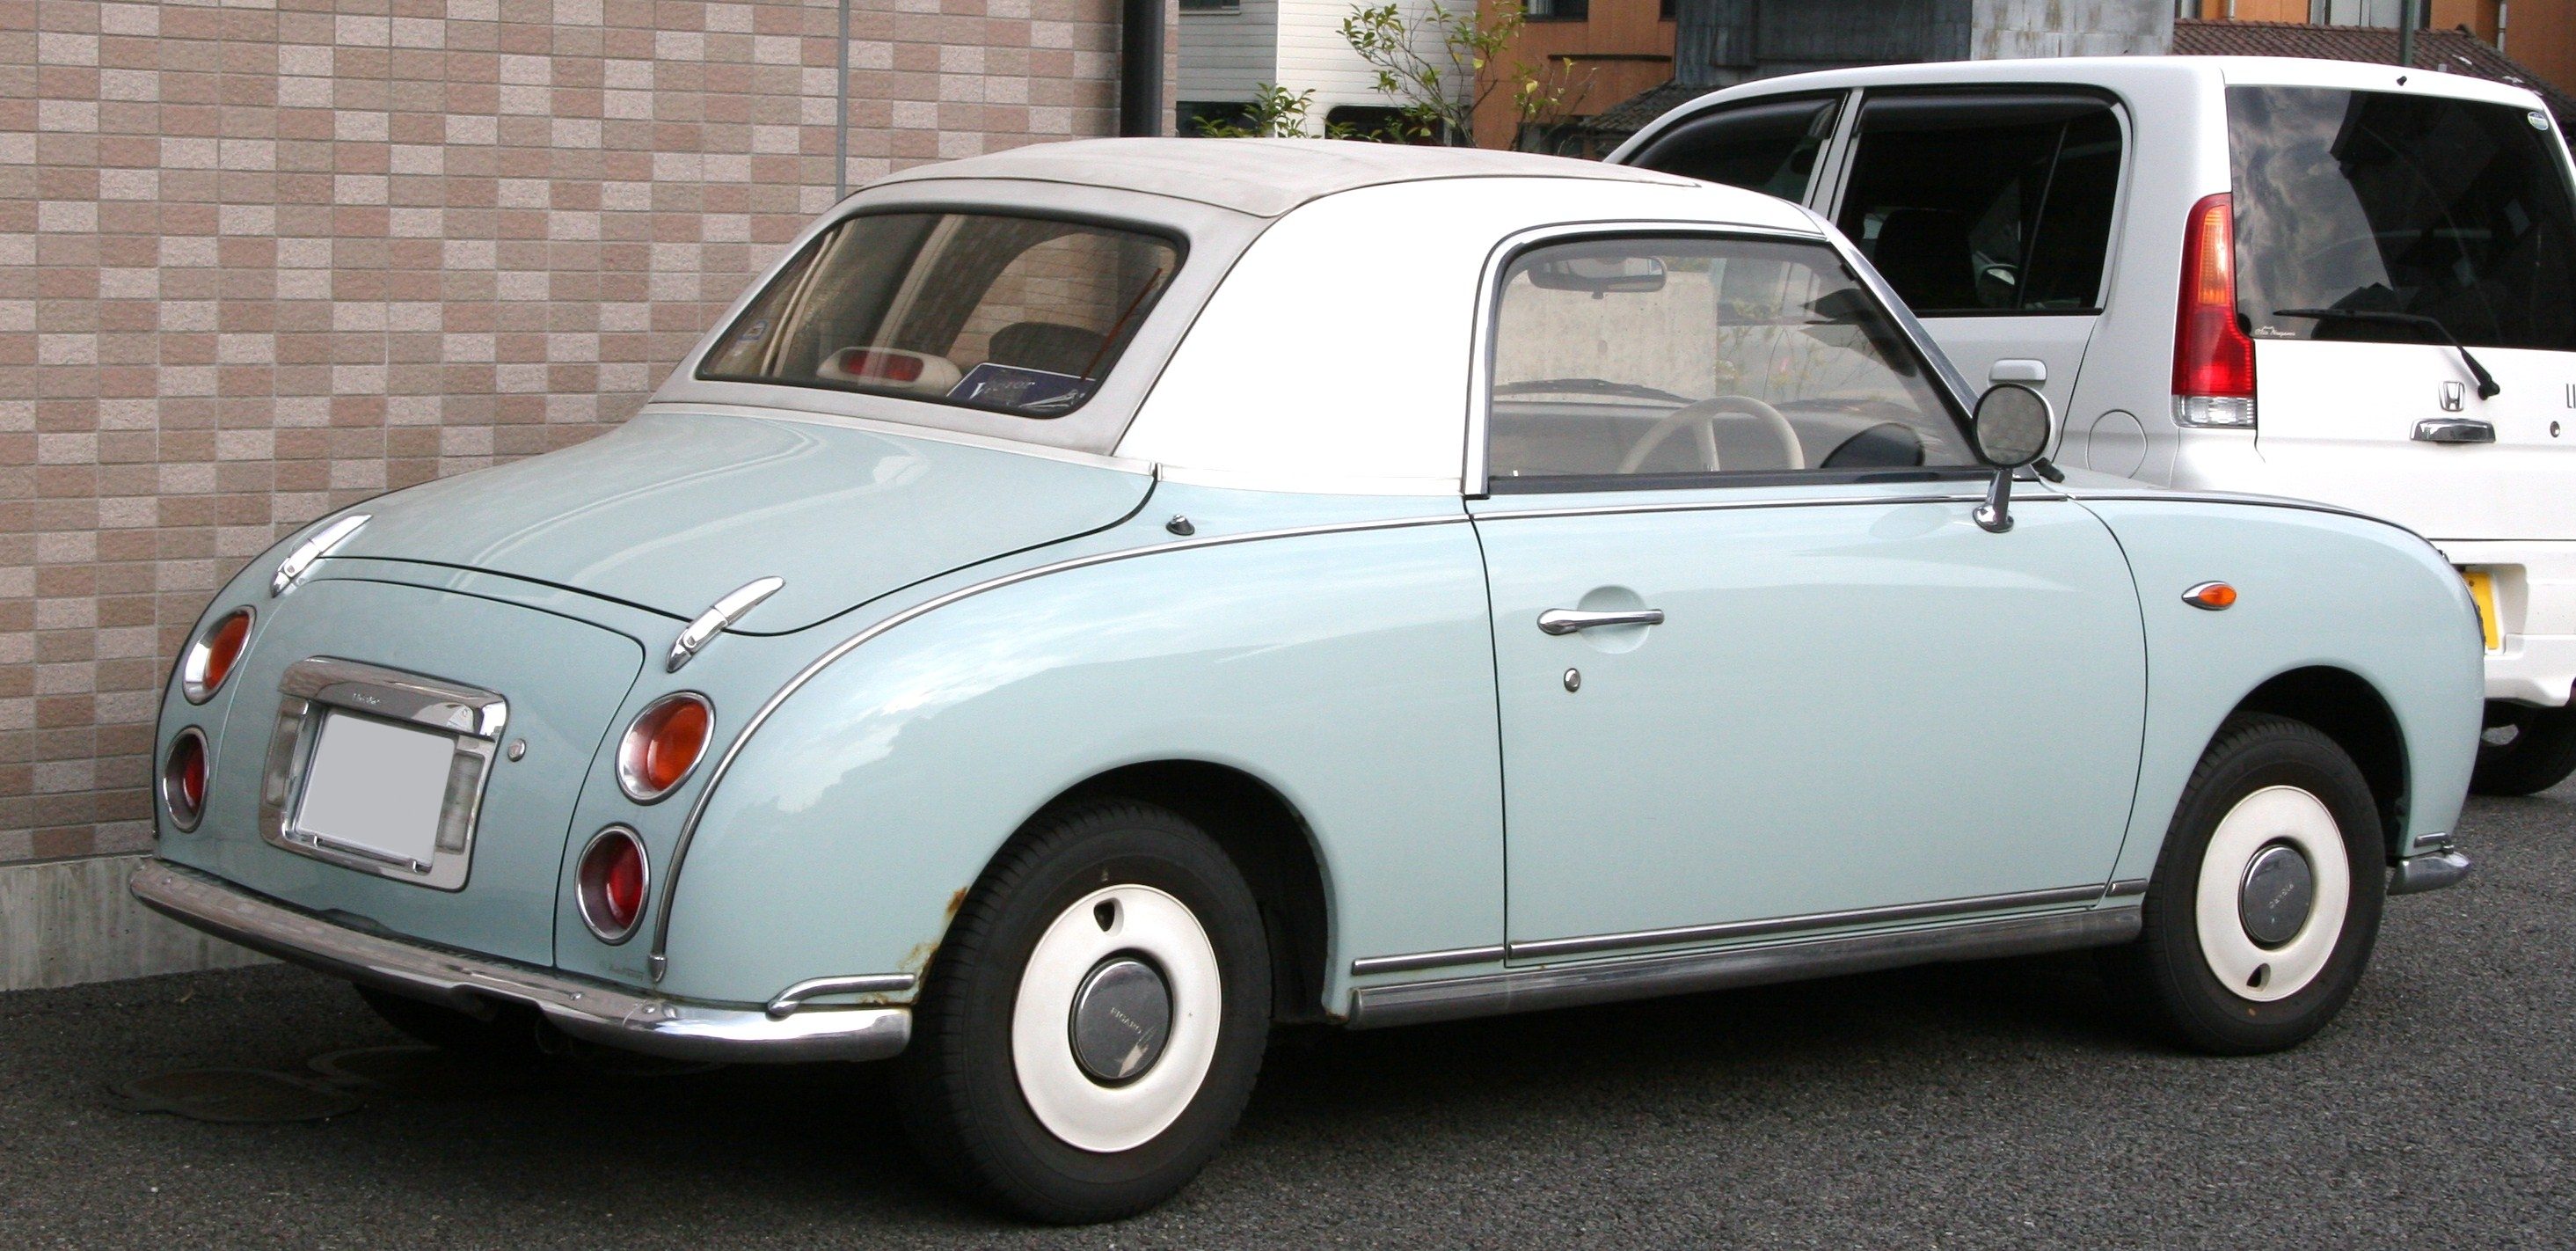 Nissan_Figaro_rear.jpg